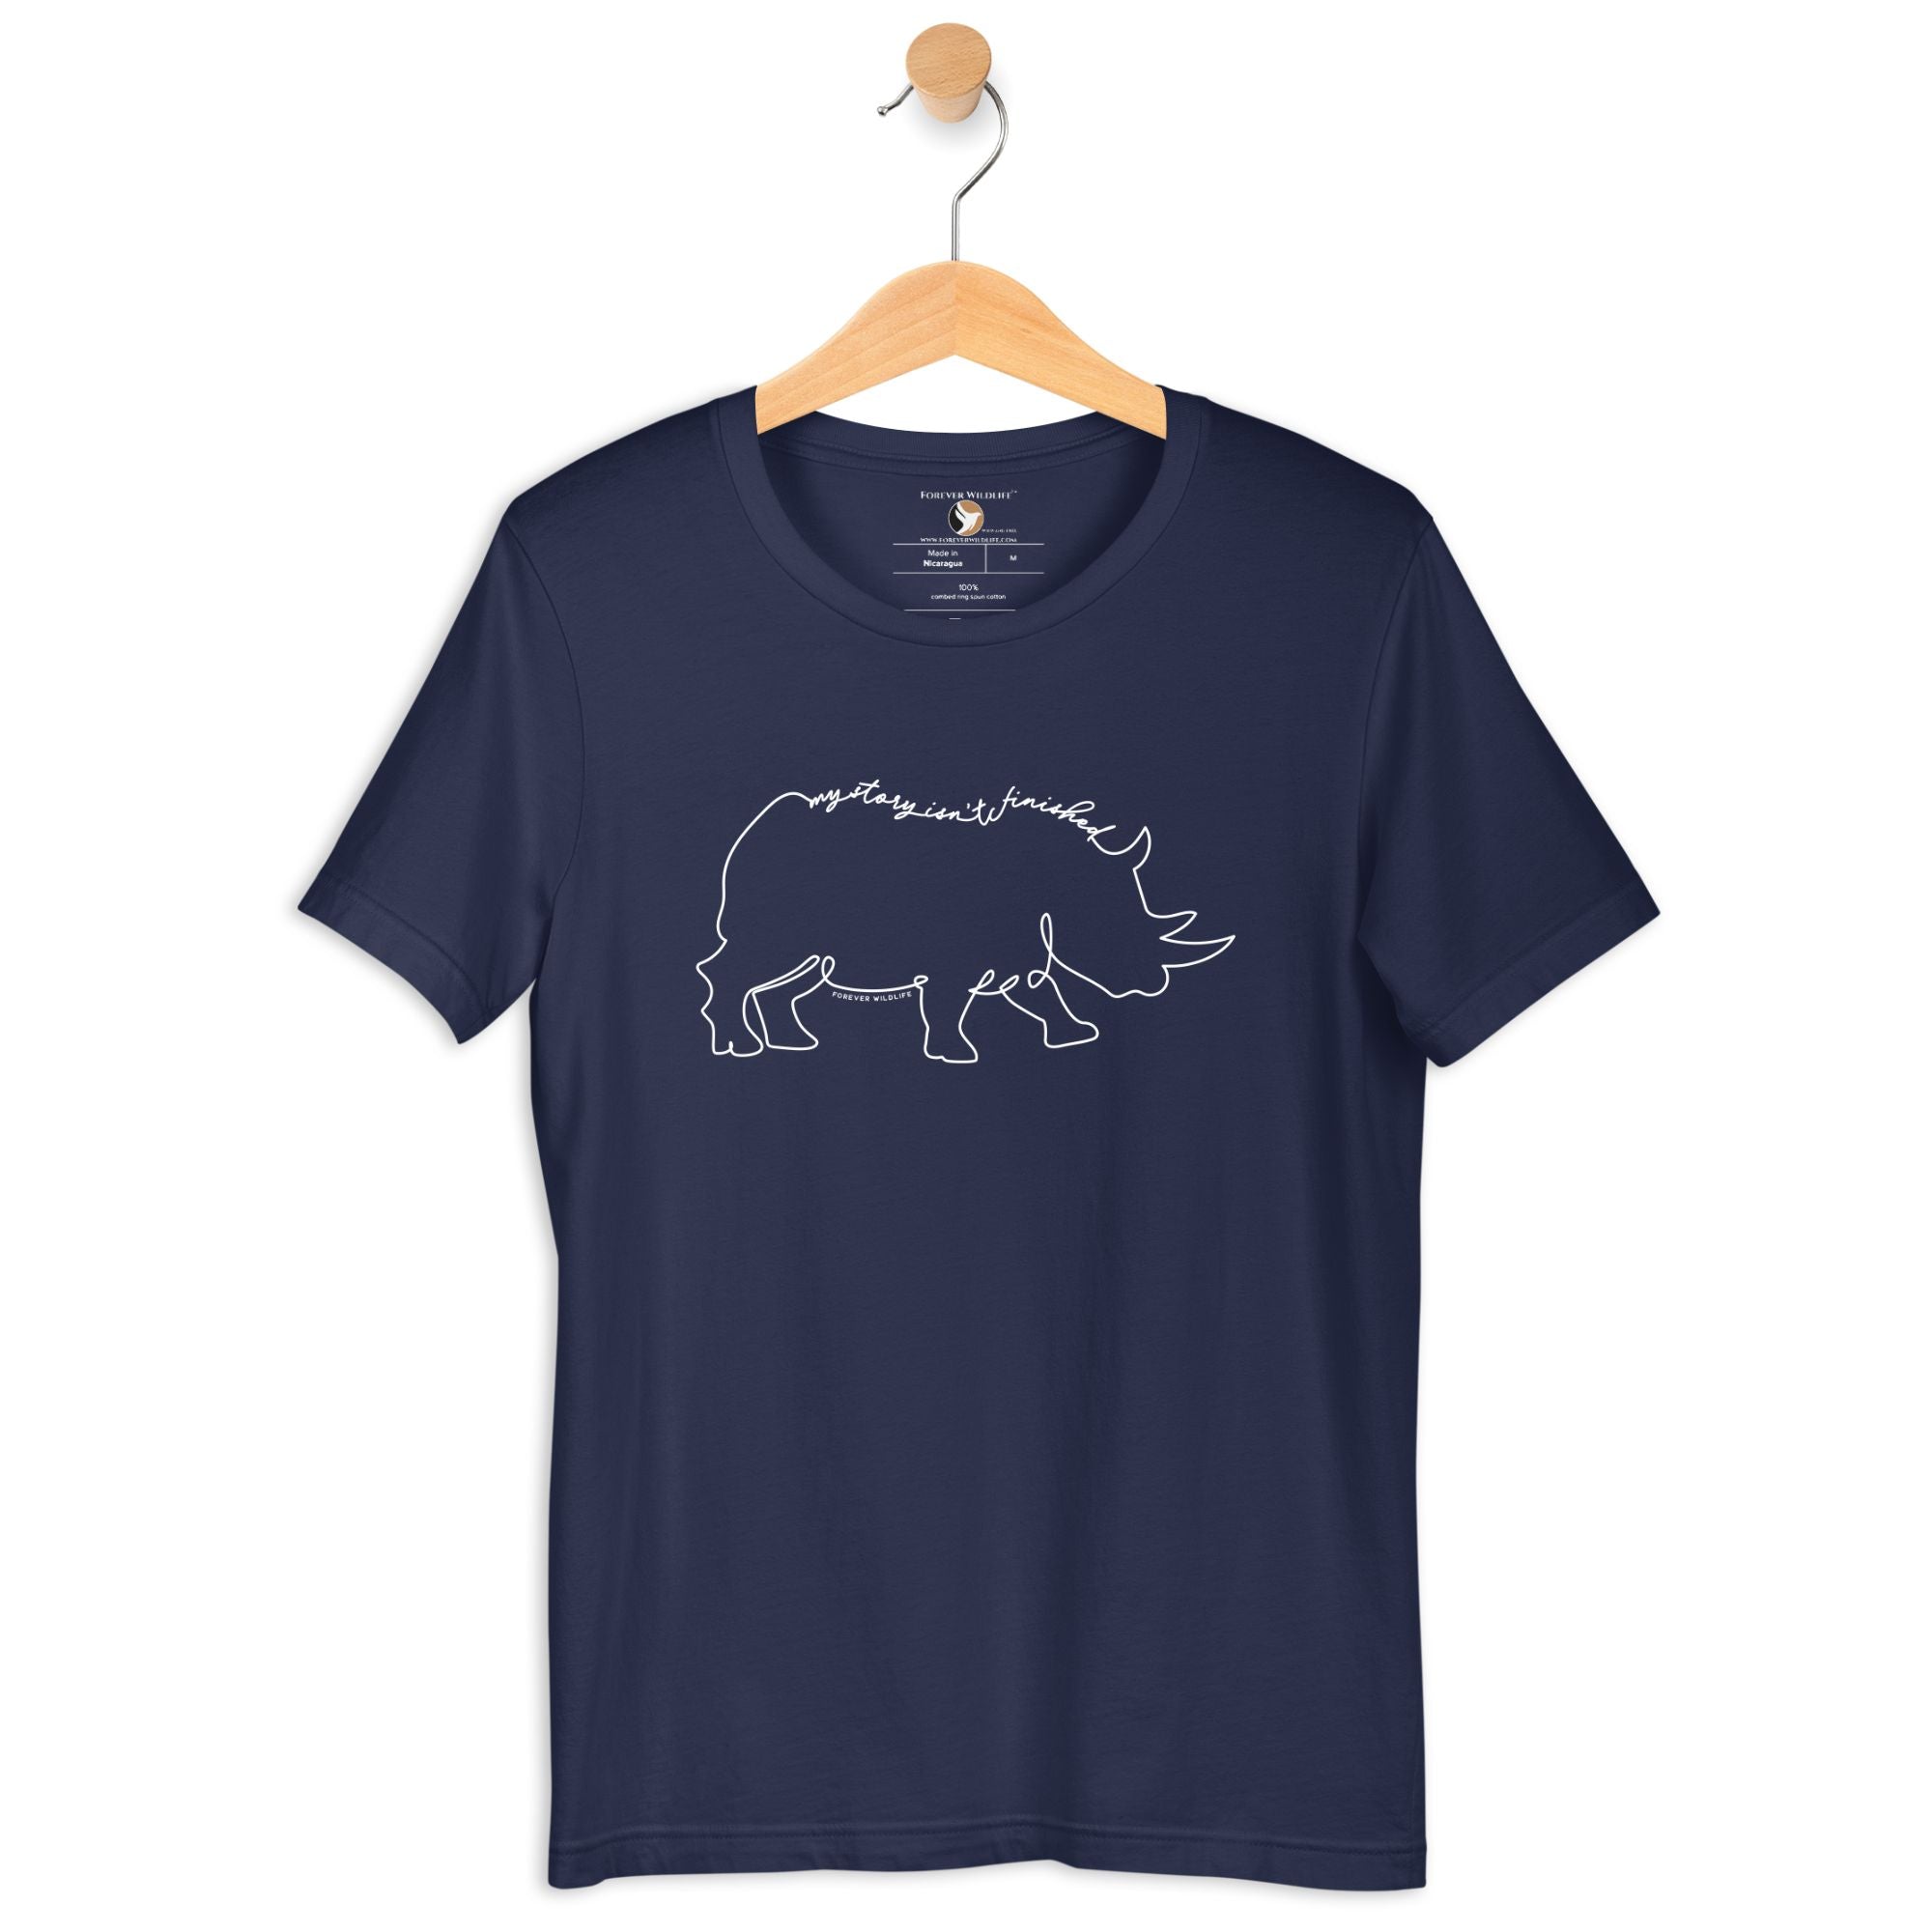 Rhino T-Shirt in Navy – Premium Wildlife T-Shirt Design with My Story Isn't Finished Text, Rhino Shirts and Wildlife Clothing